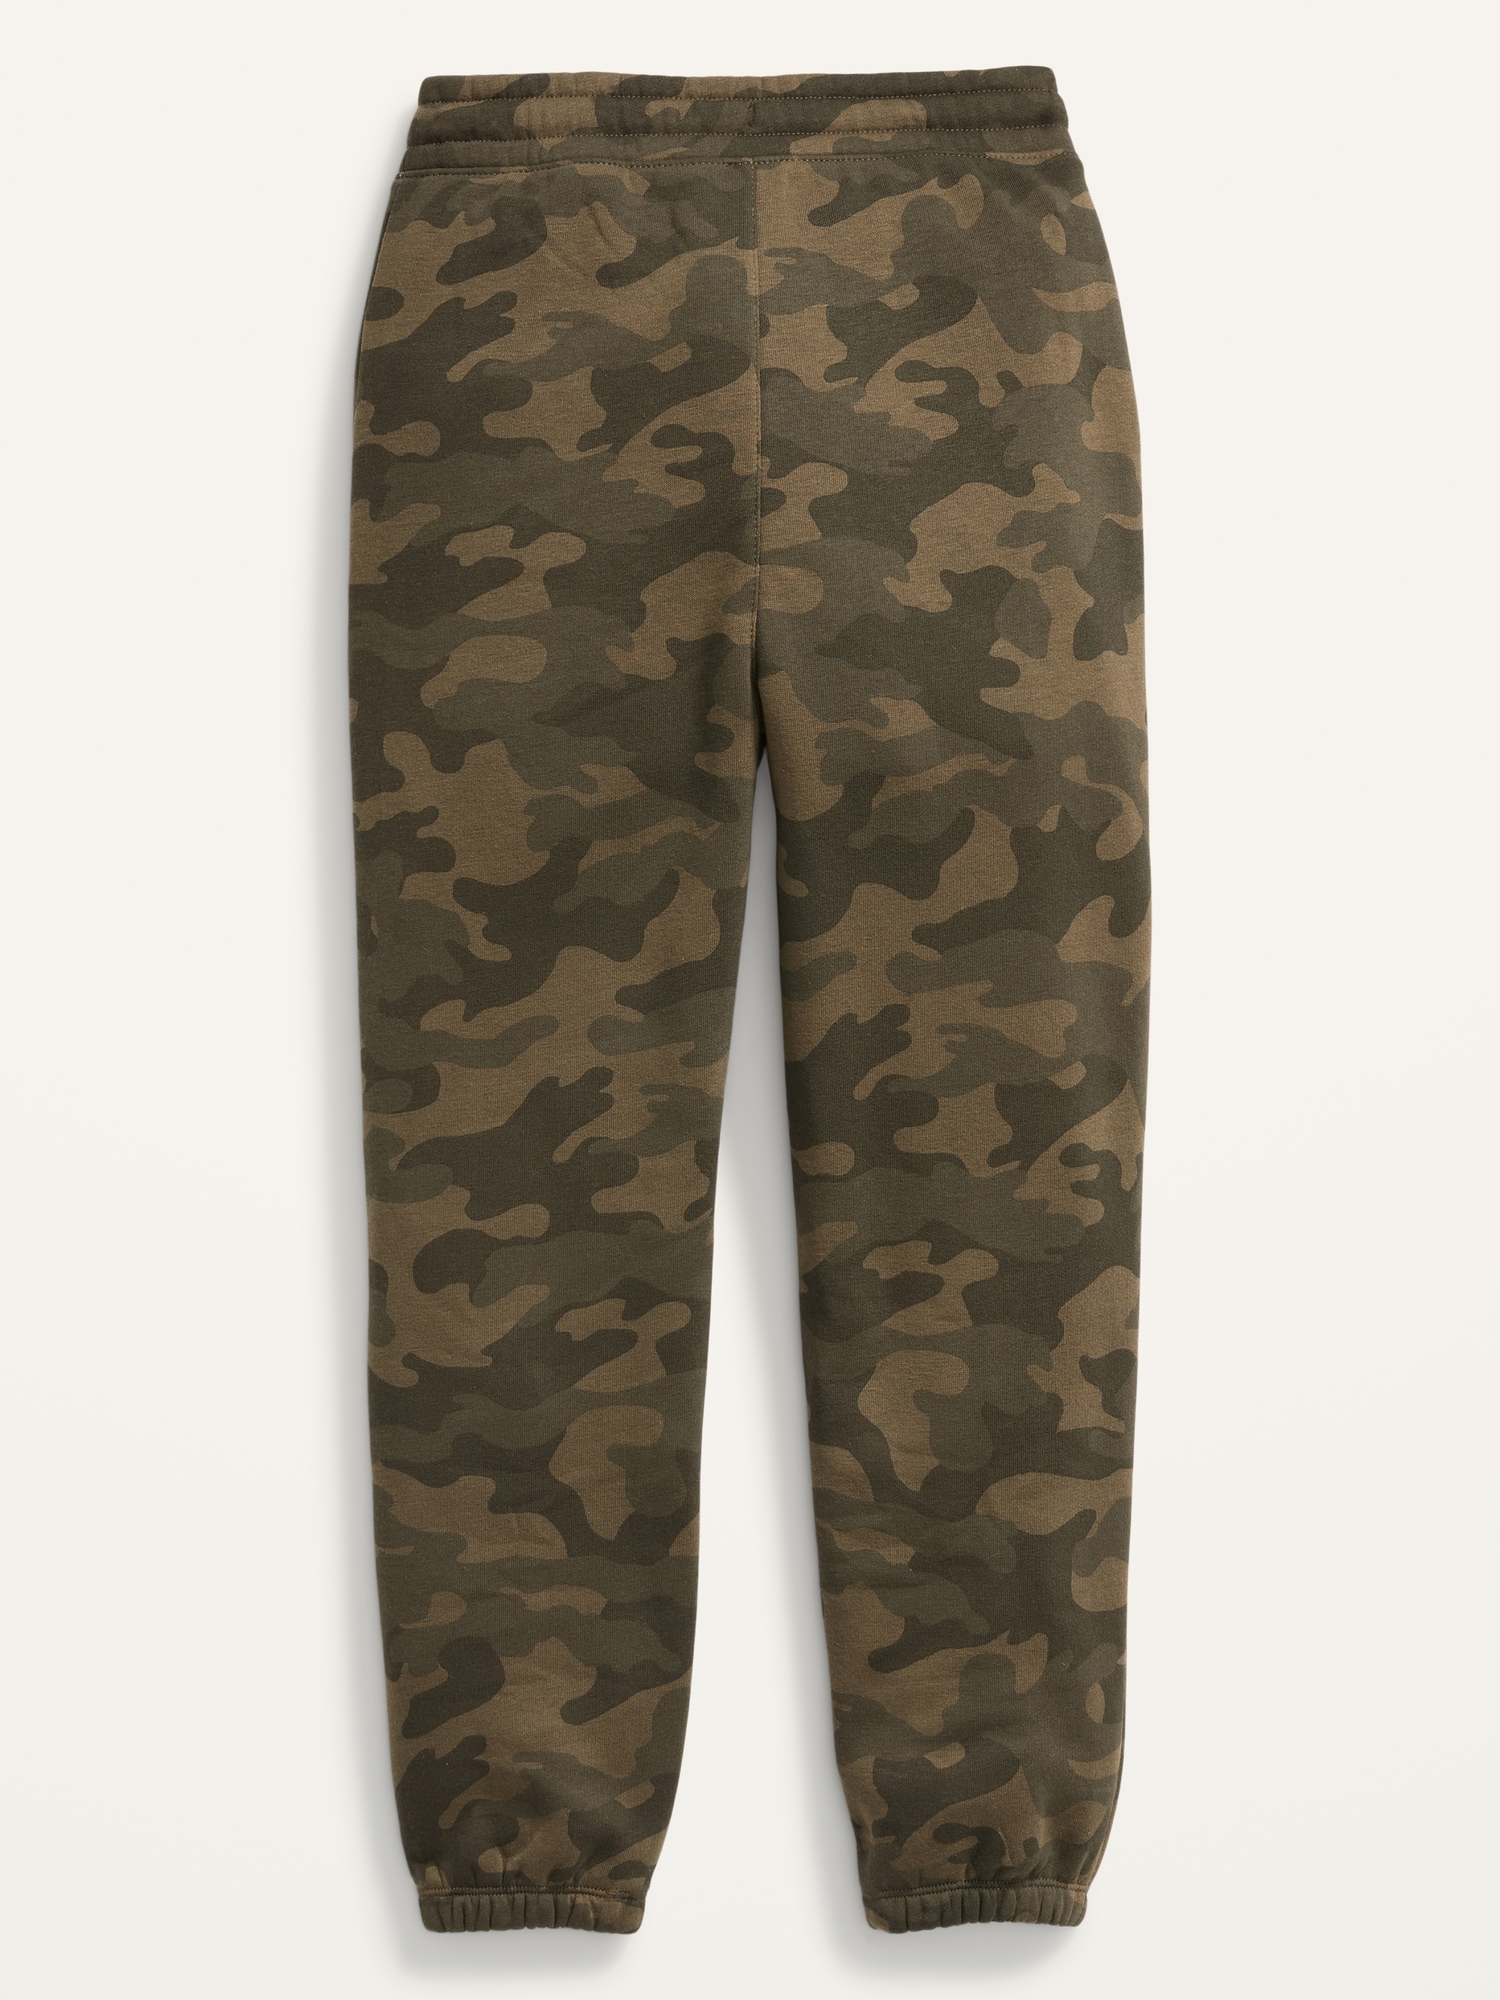 Old Navy Leggings Sweatpants Girls 5T Black Gold Soft Cotton Comfort 18x16